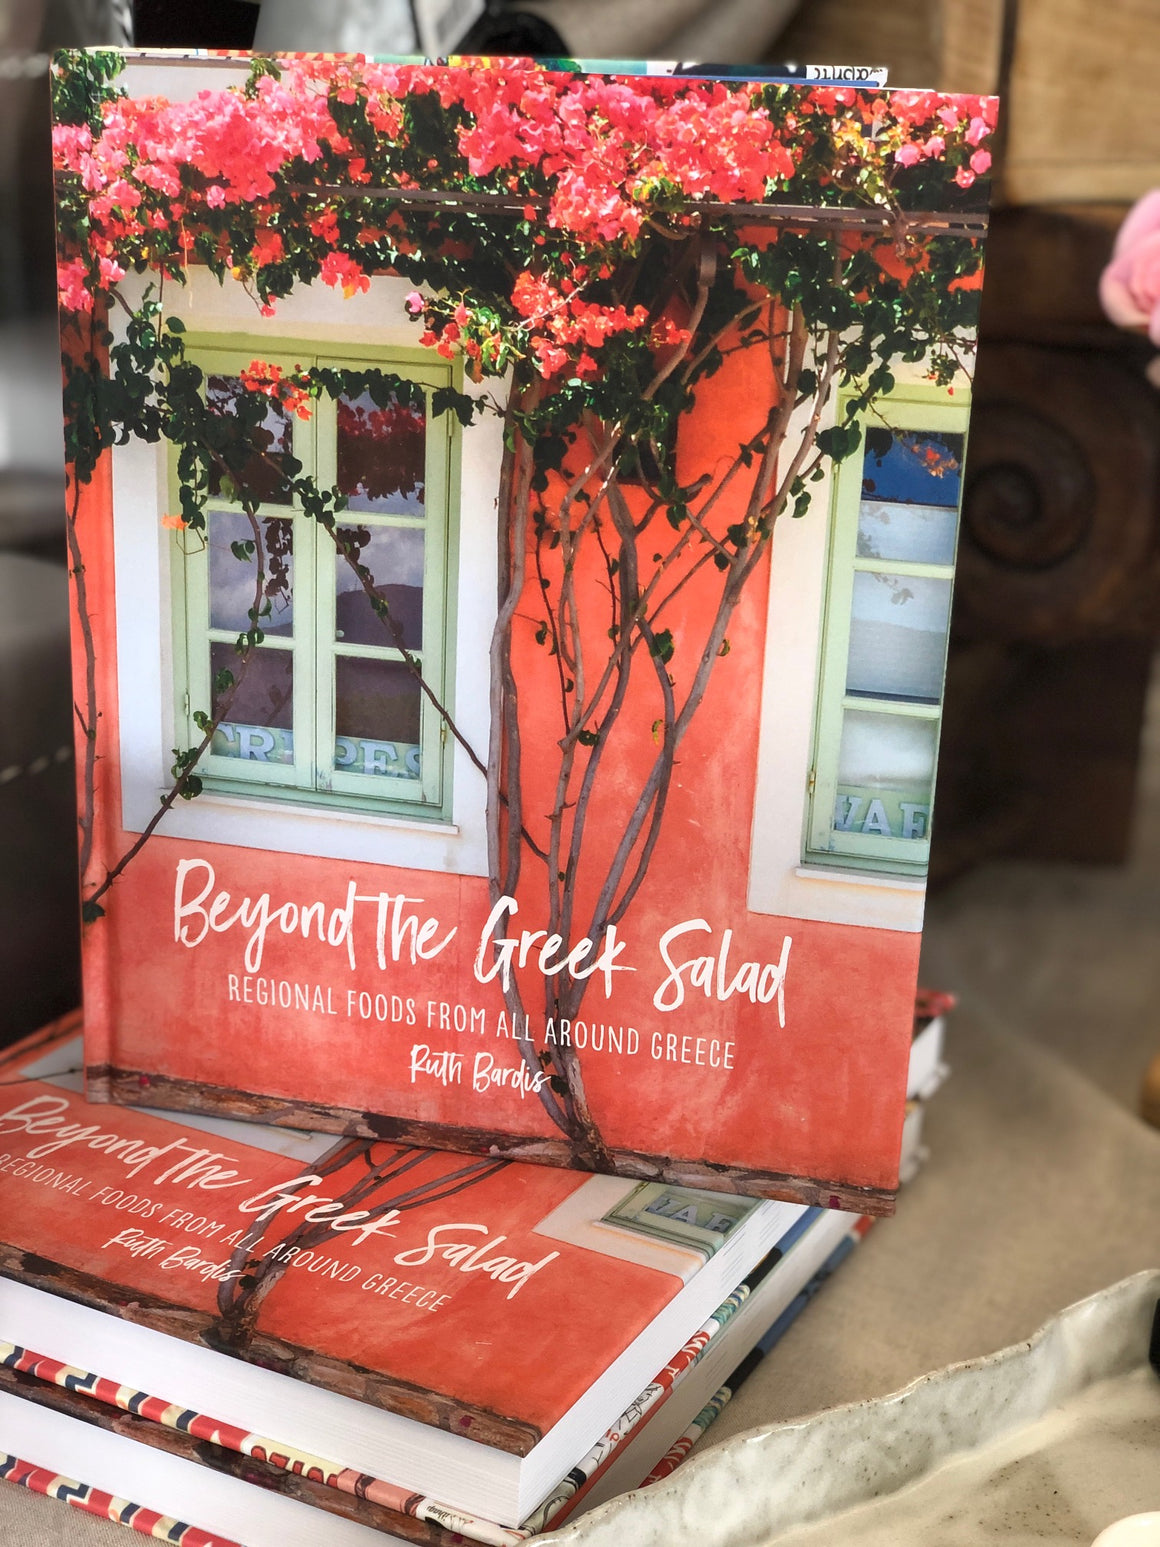 Beyond the Greek Salad by Ruth Bardis